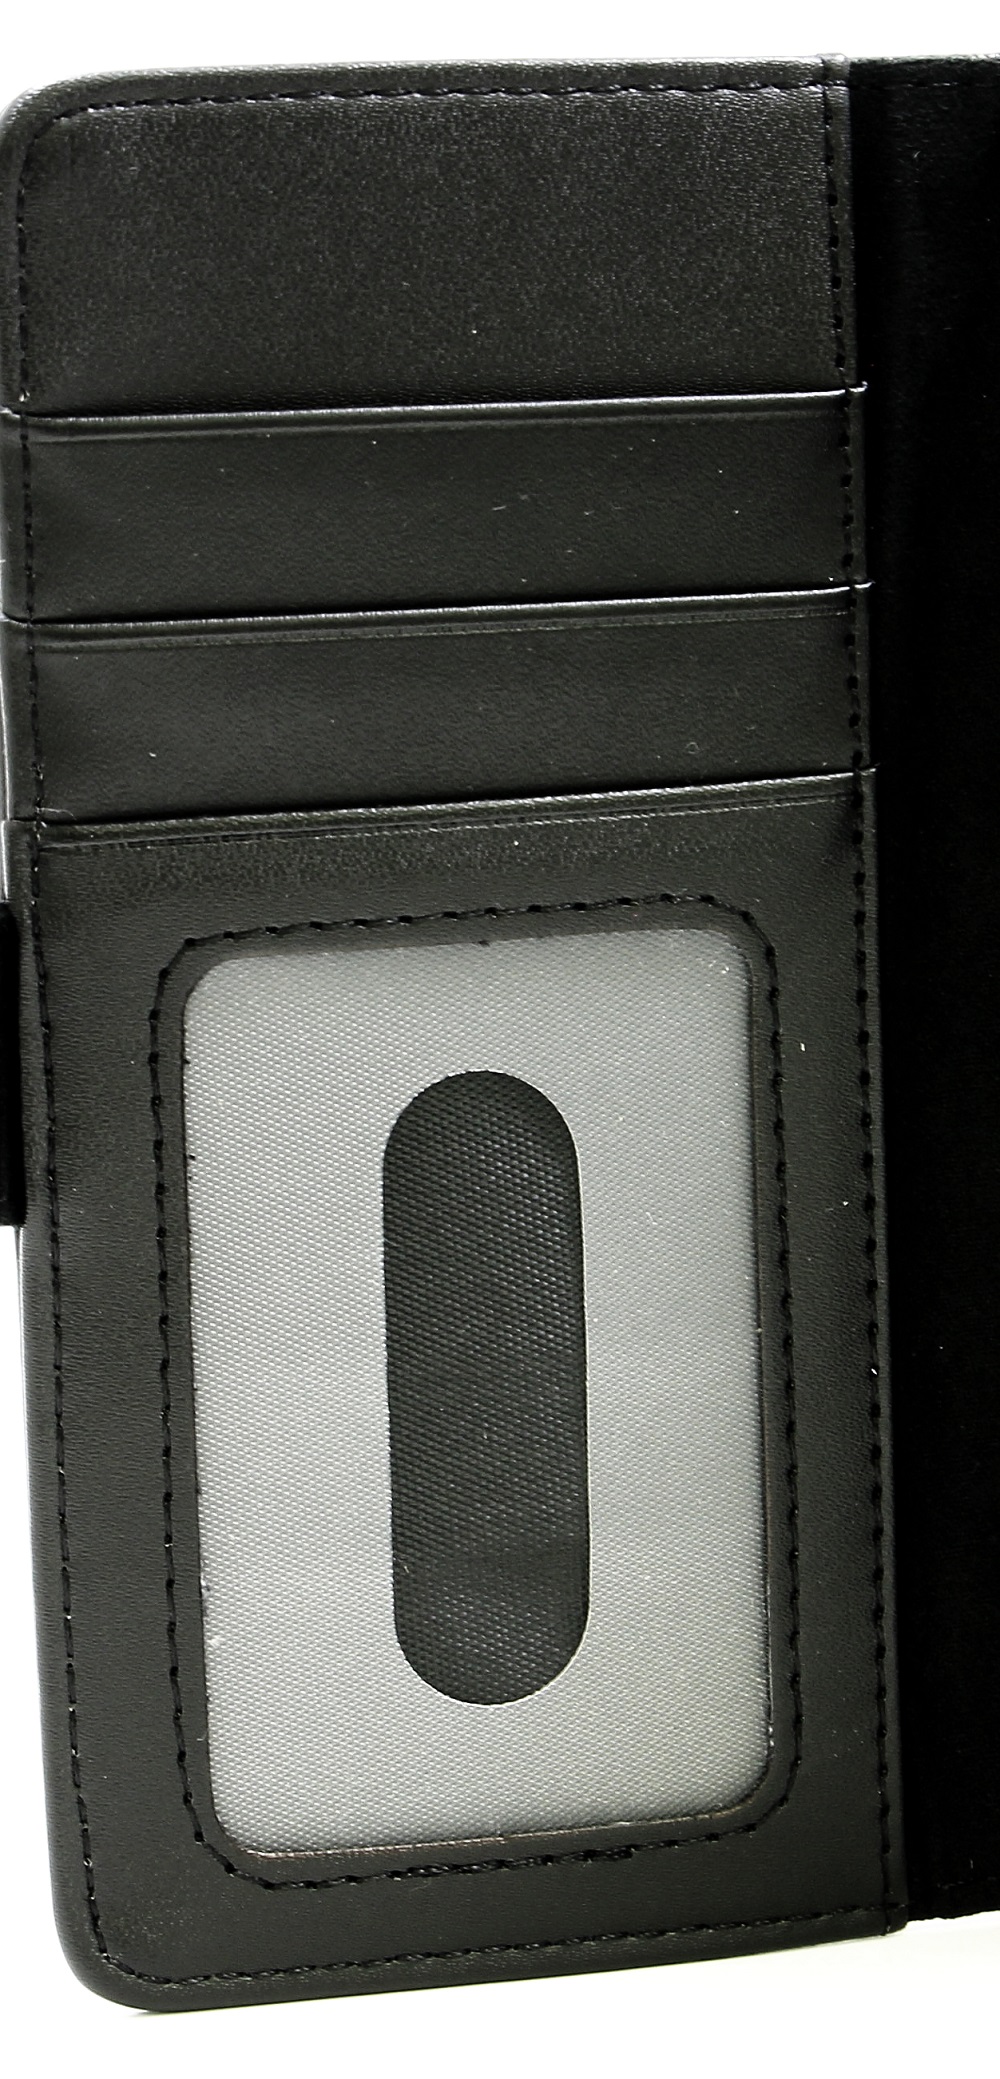 Skimblocker Mobiltaske Sony Xperia XZ Premium (G8141)